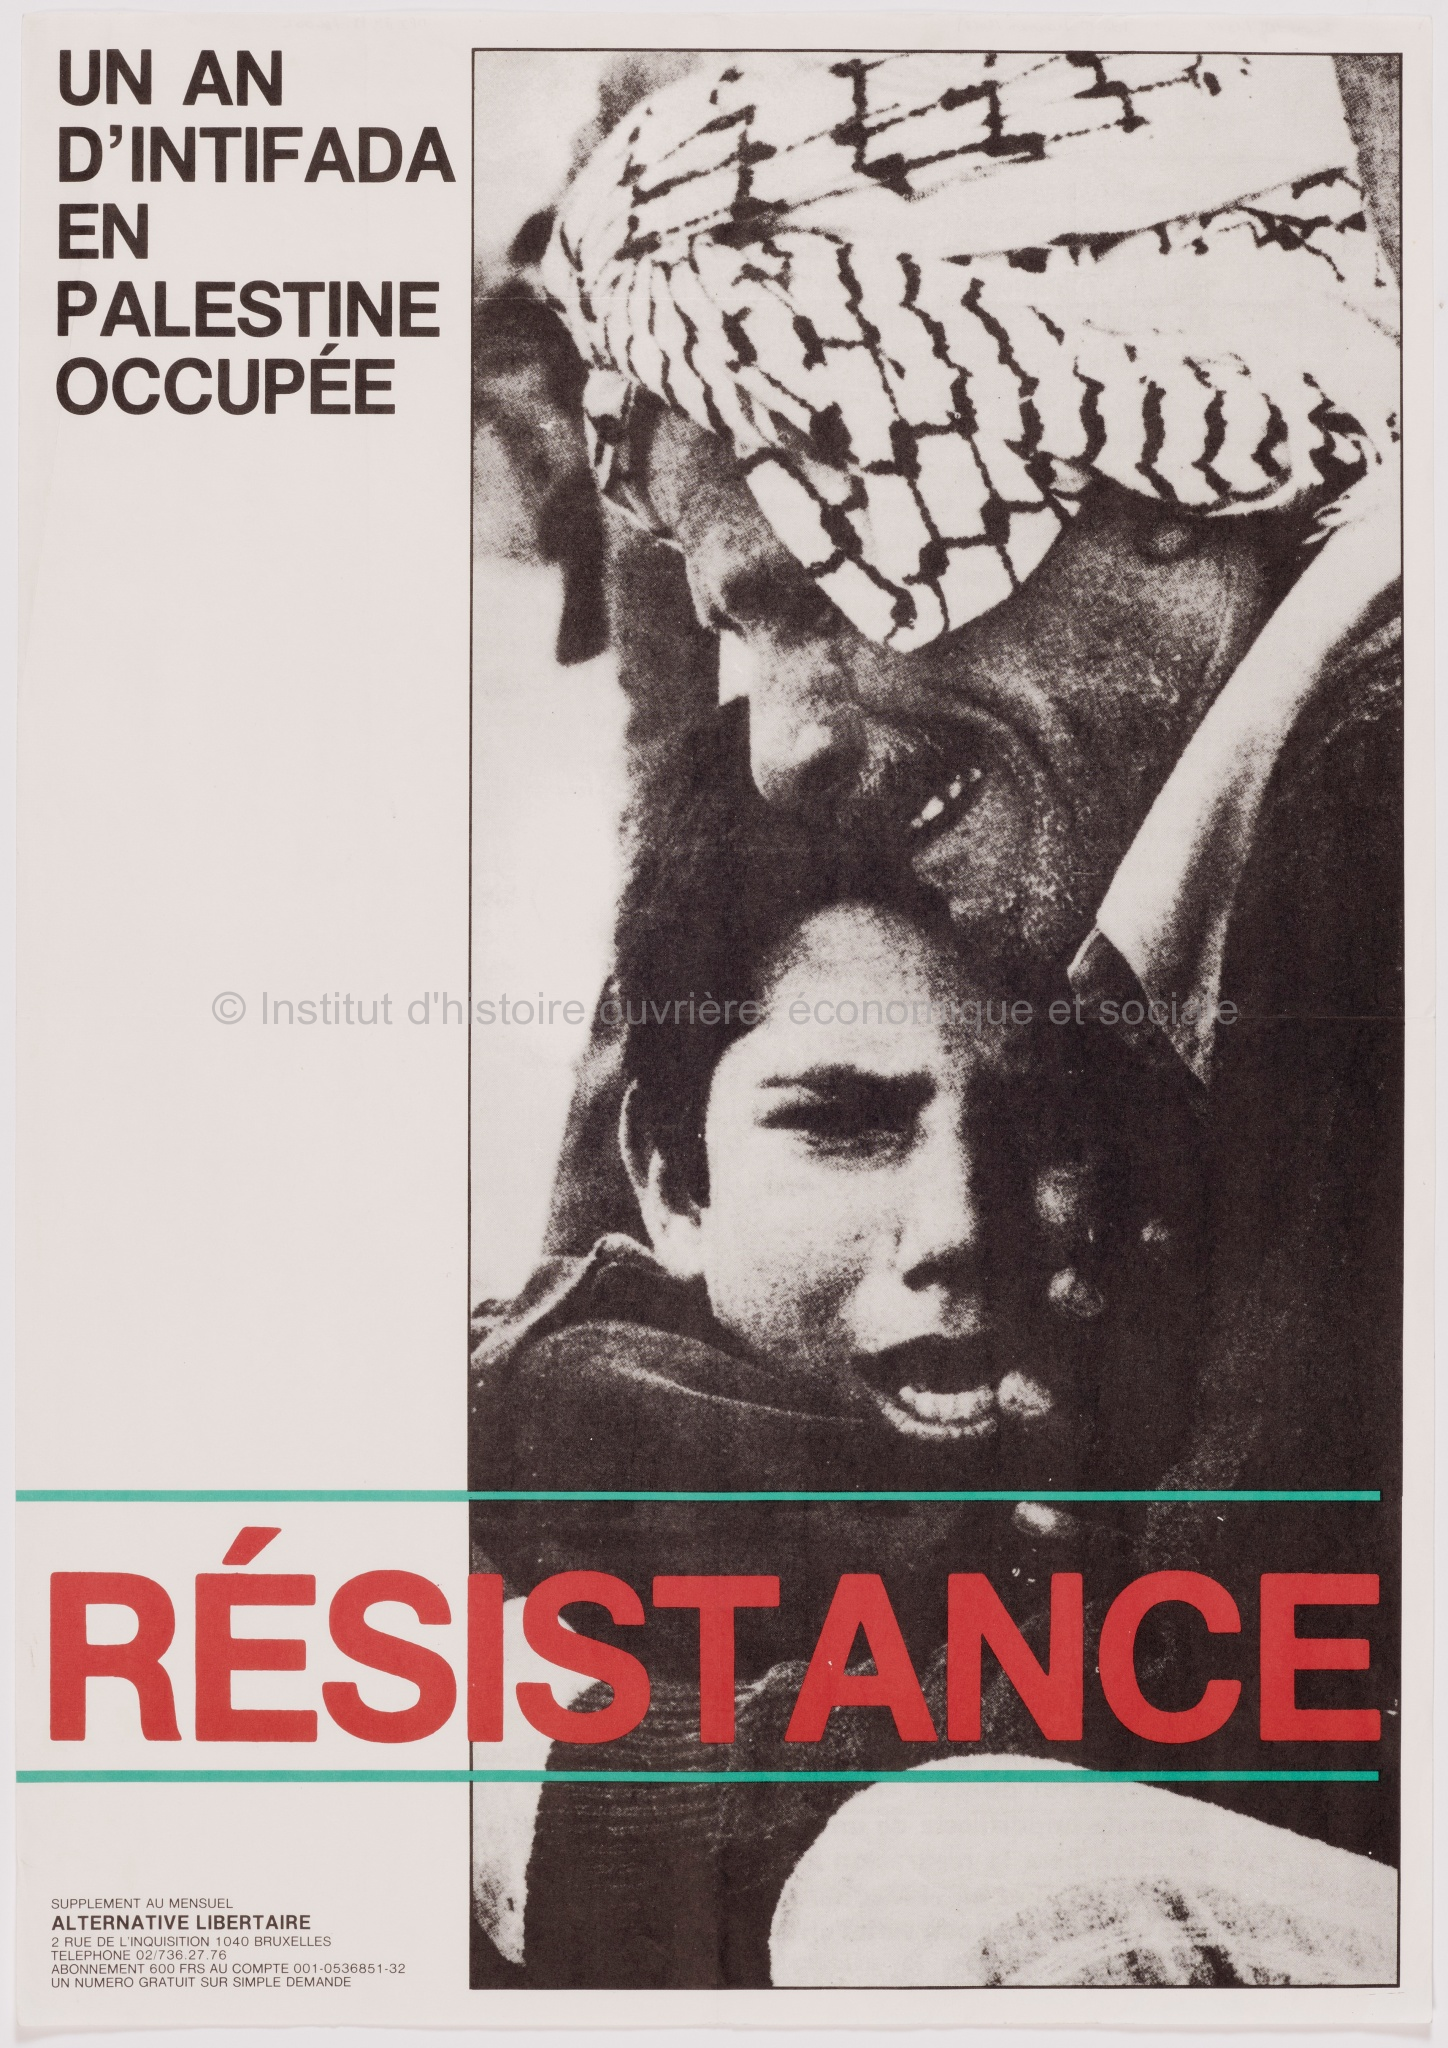 Un an d'intifada en Palestine occupée : Résistance